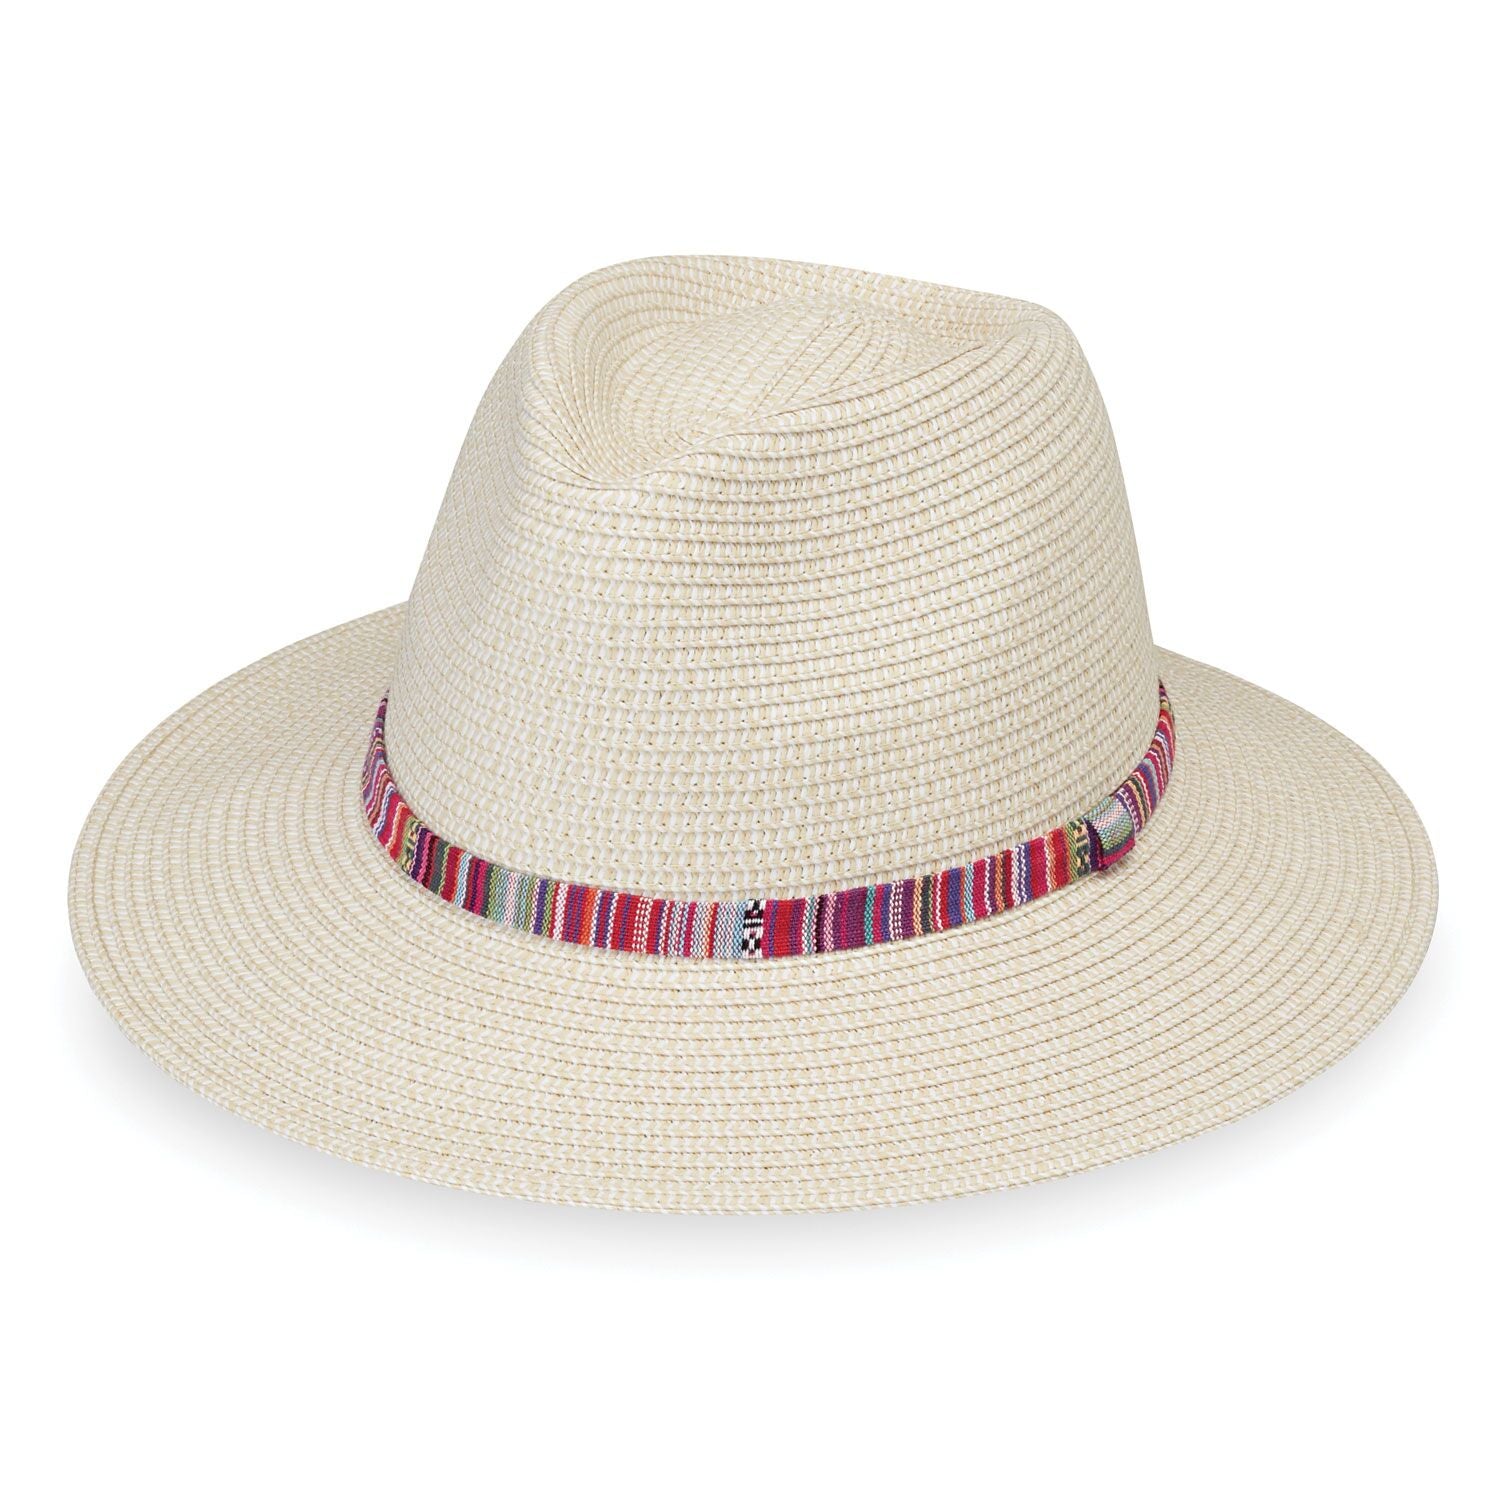 Sedona Safari Hat with Aztec Band - Wallaroo Hats Safari Hat Wallaroo Hats SEDna Natural Medium/Large (58 cm) 